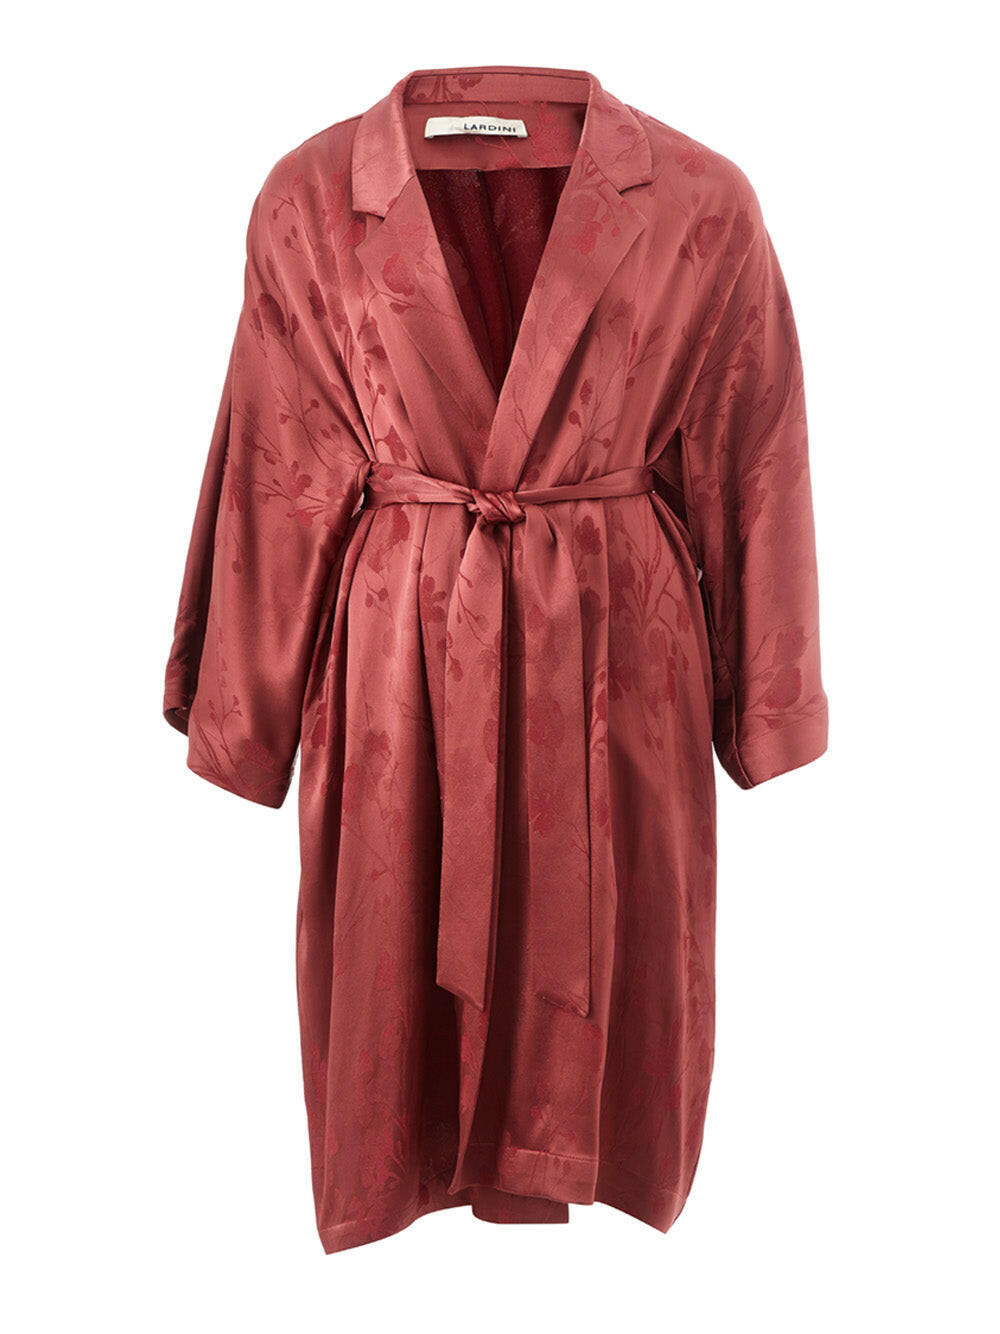 Lardini Red Allover printed robe Trench coat - GENUINE AUTHENTIC BRAND LLC  